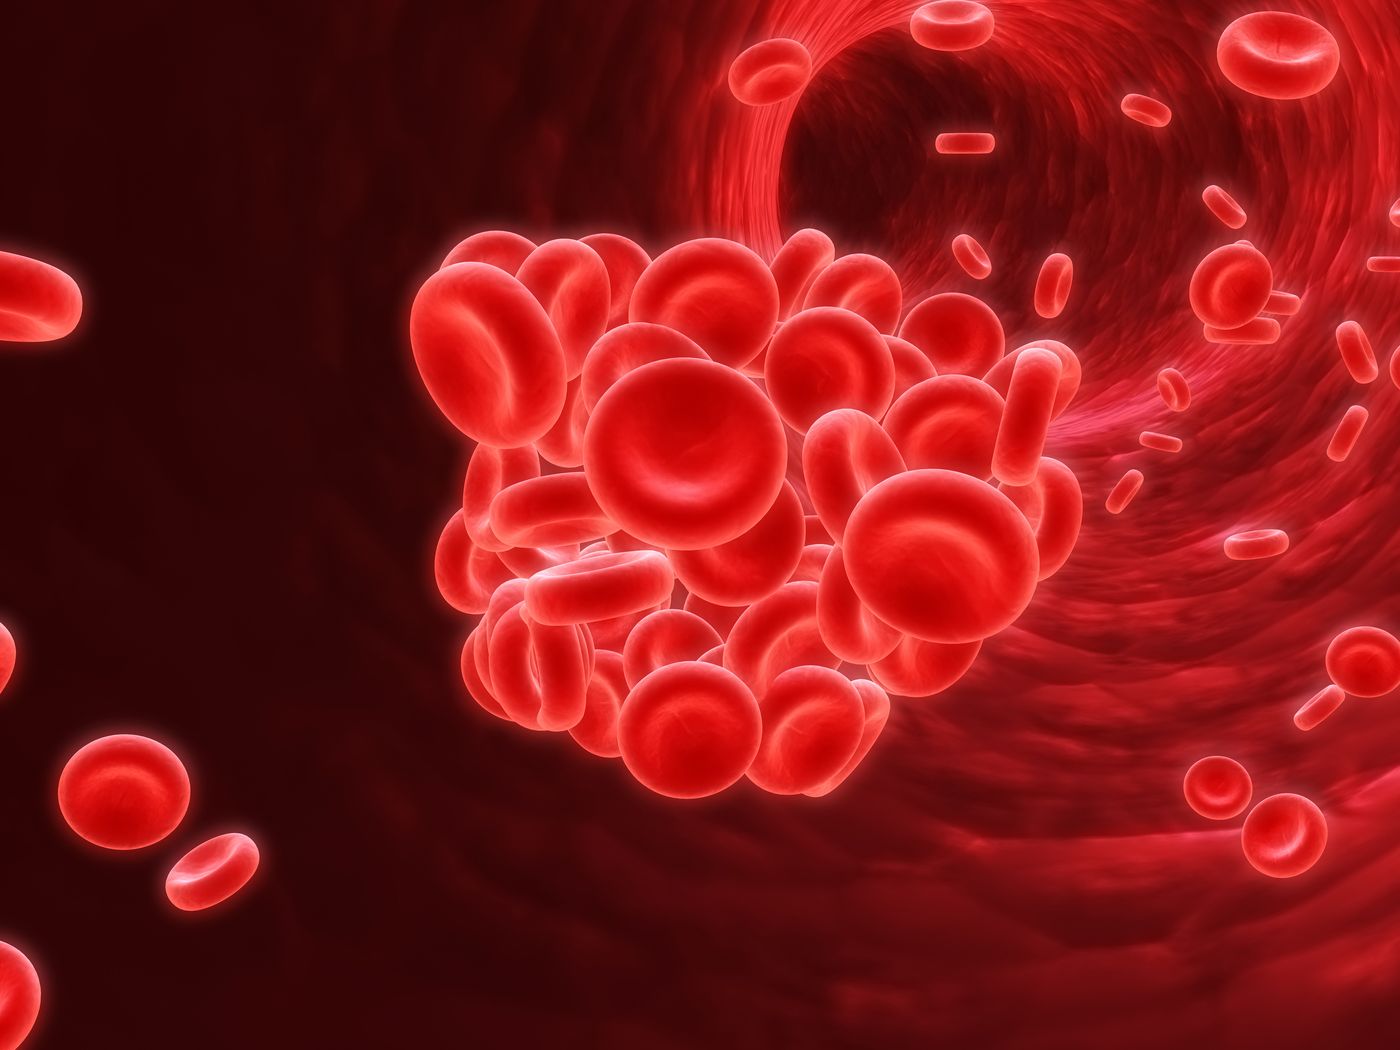 An artistic rendering of a blood clot. Source: Harvard Health Publications - Harvard University